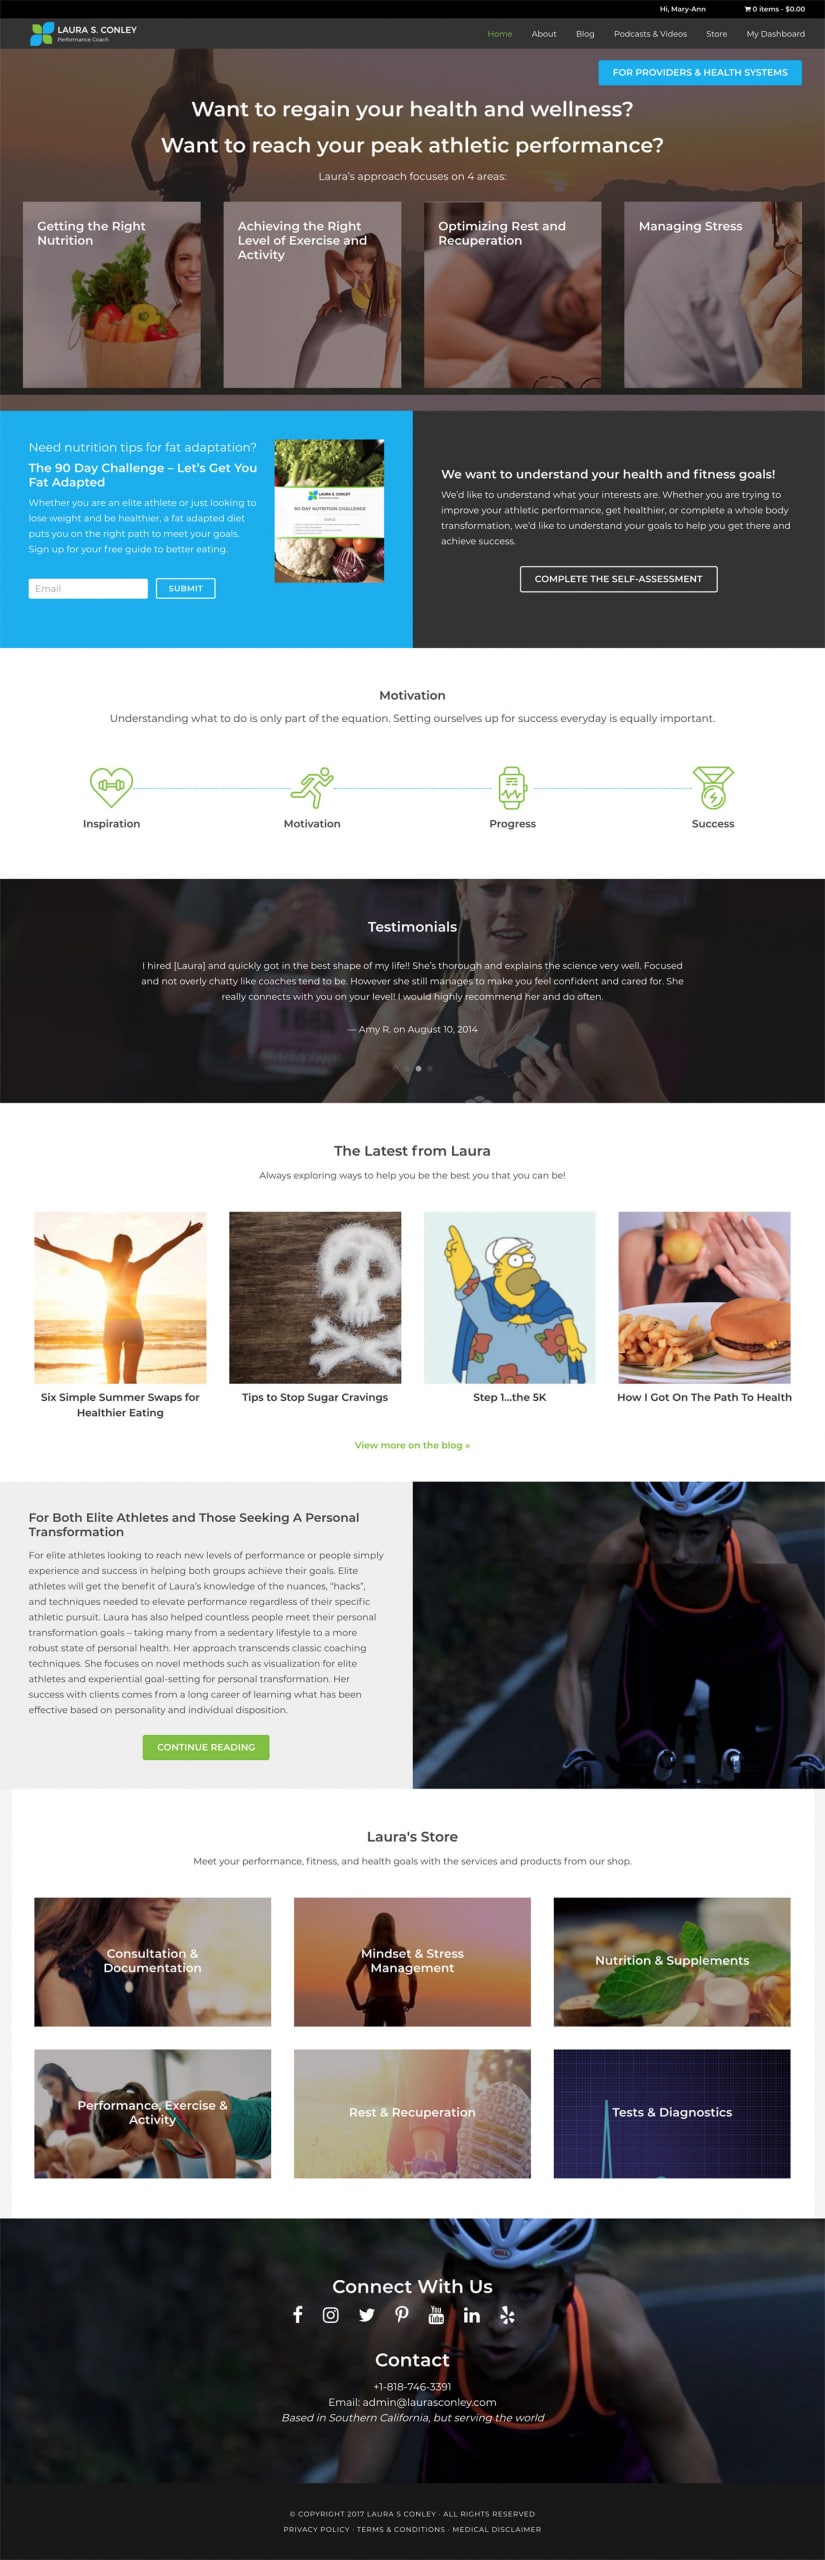 Wellness Portal Homepage